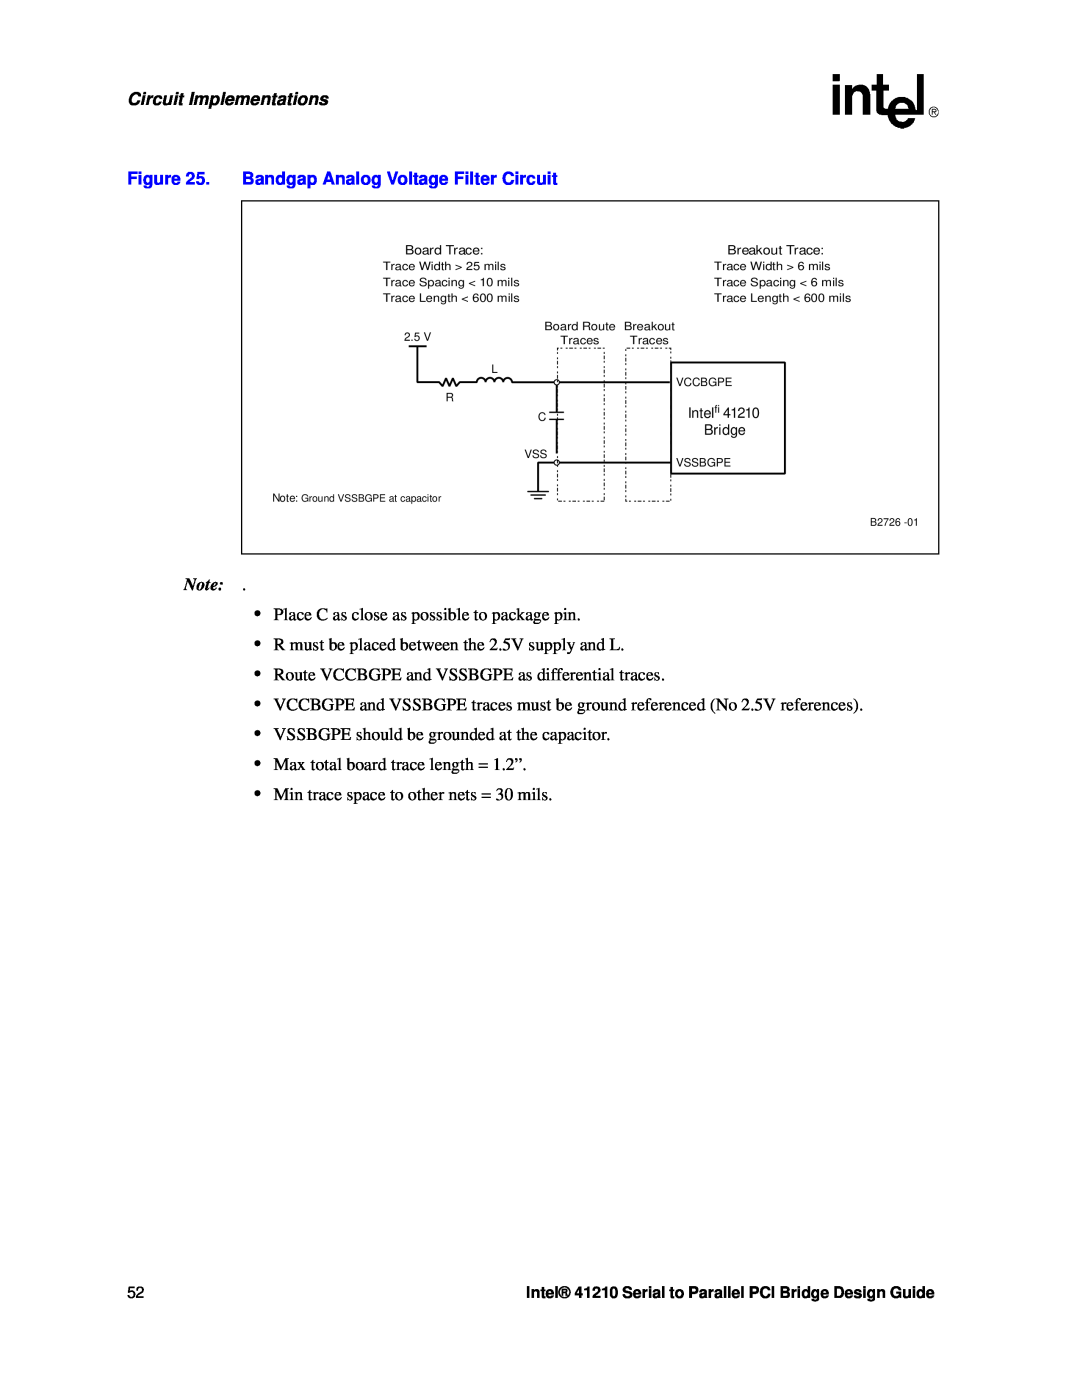 Intel 41210 manual Bandgap Analog Voltage Filter Circuit, Circuit Implementations, B2726 